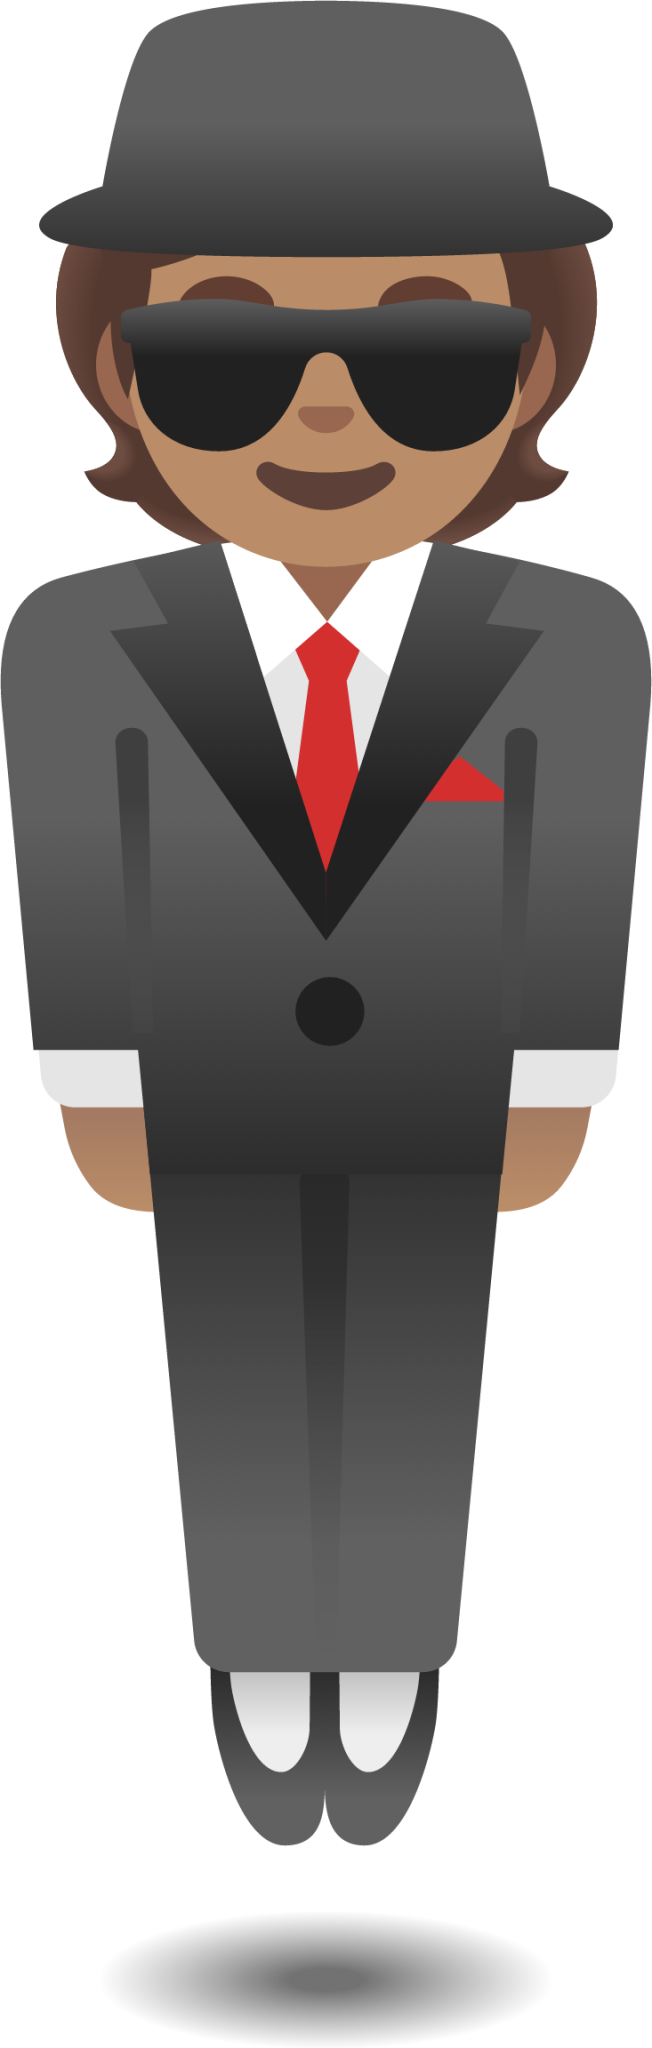 man in business suit levitating: medium skin tone emoji